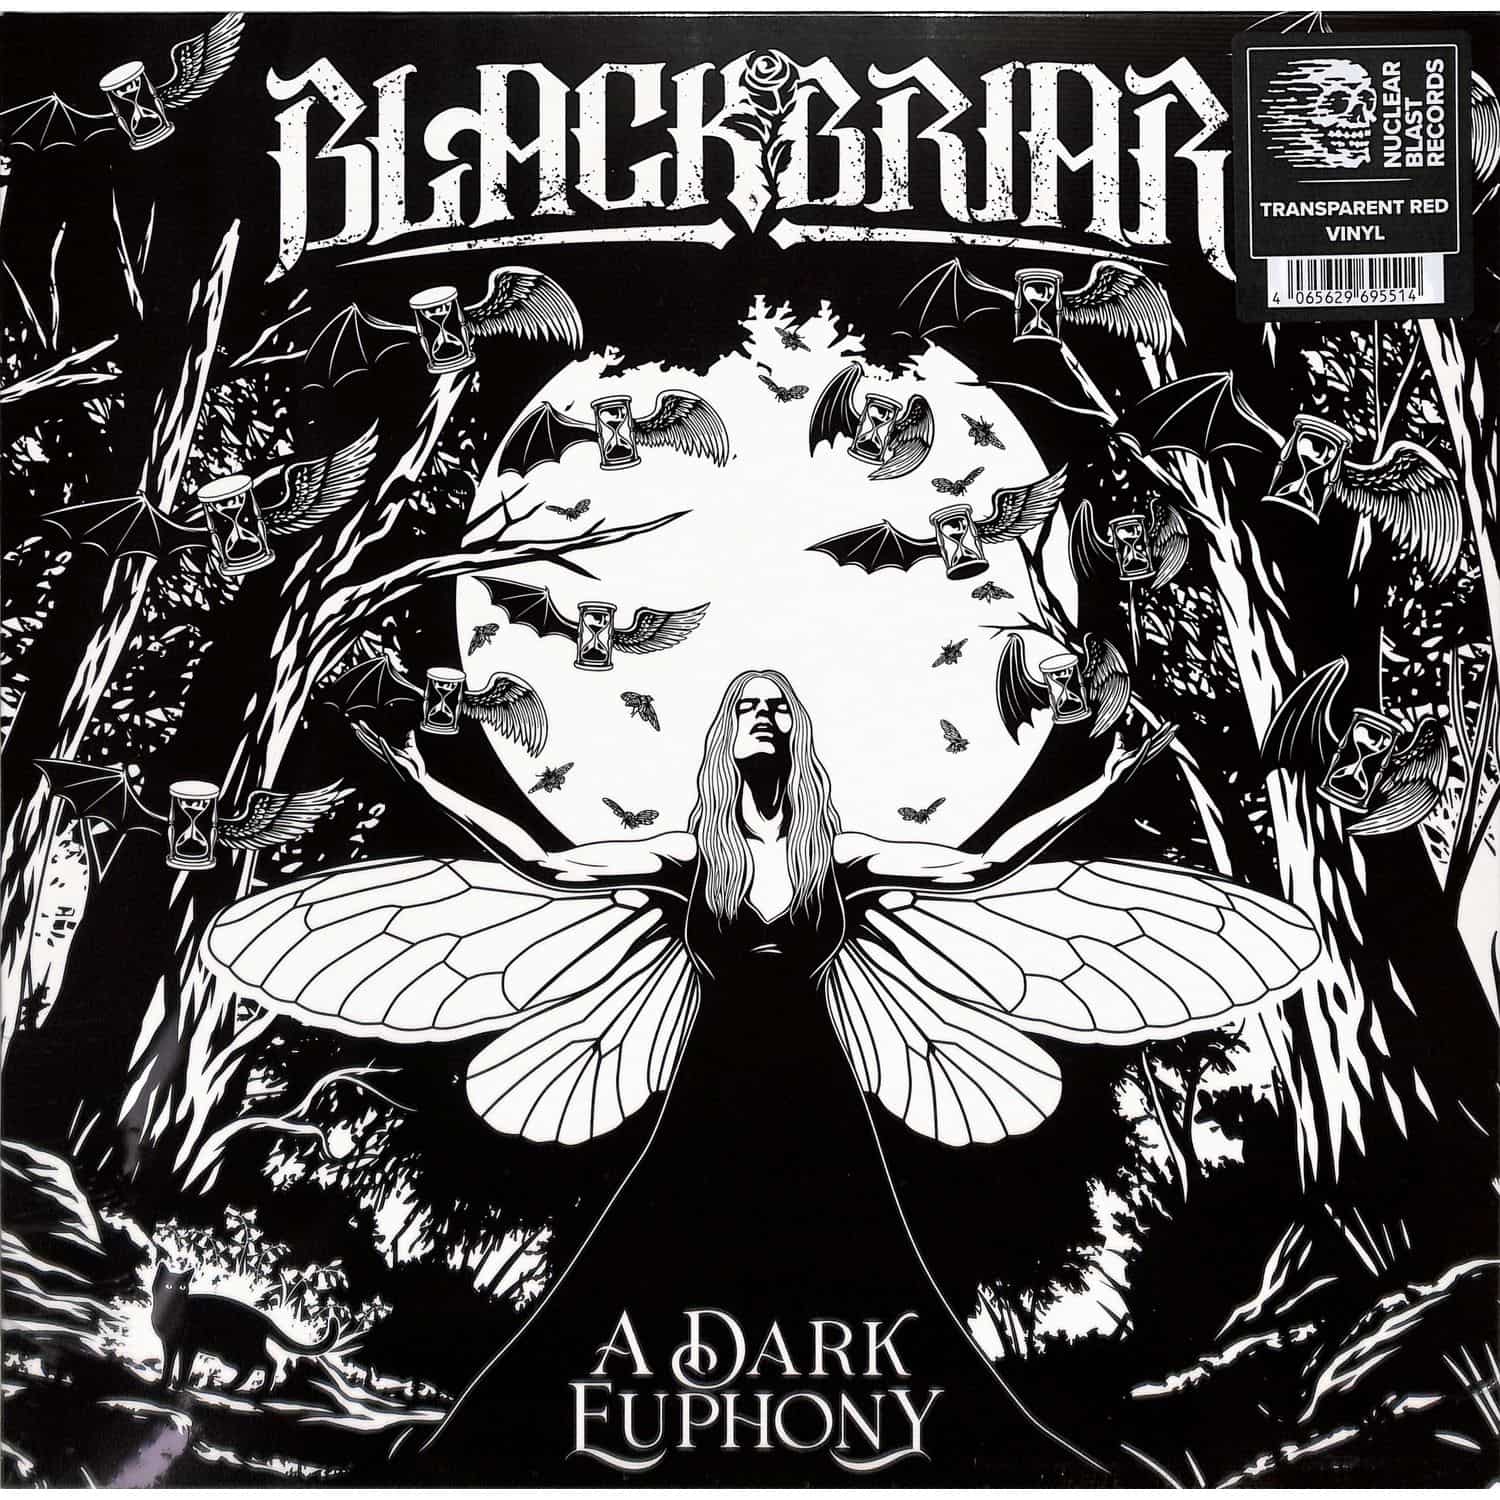 Blackbriar - A DARK EUPHONY 